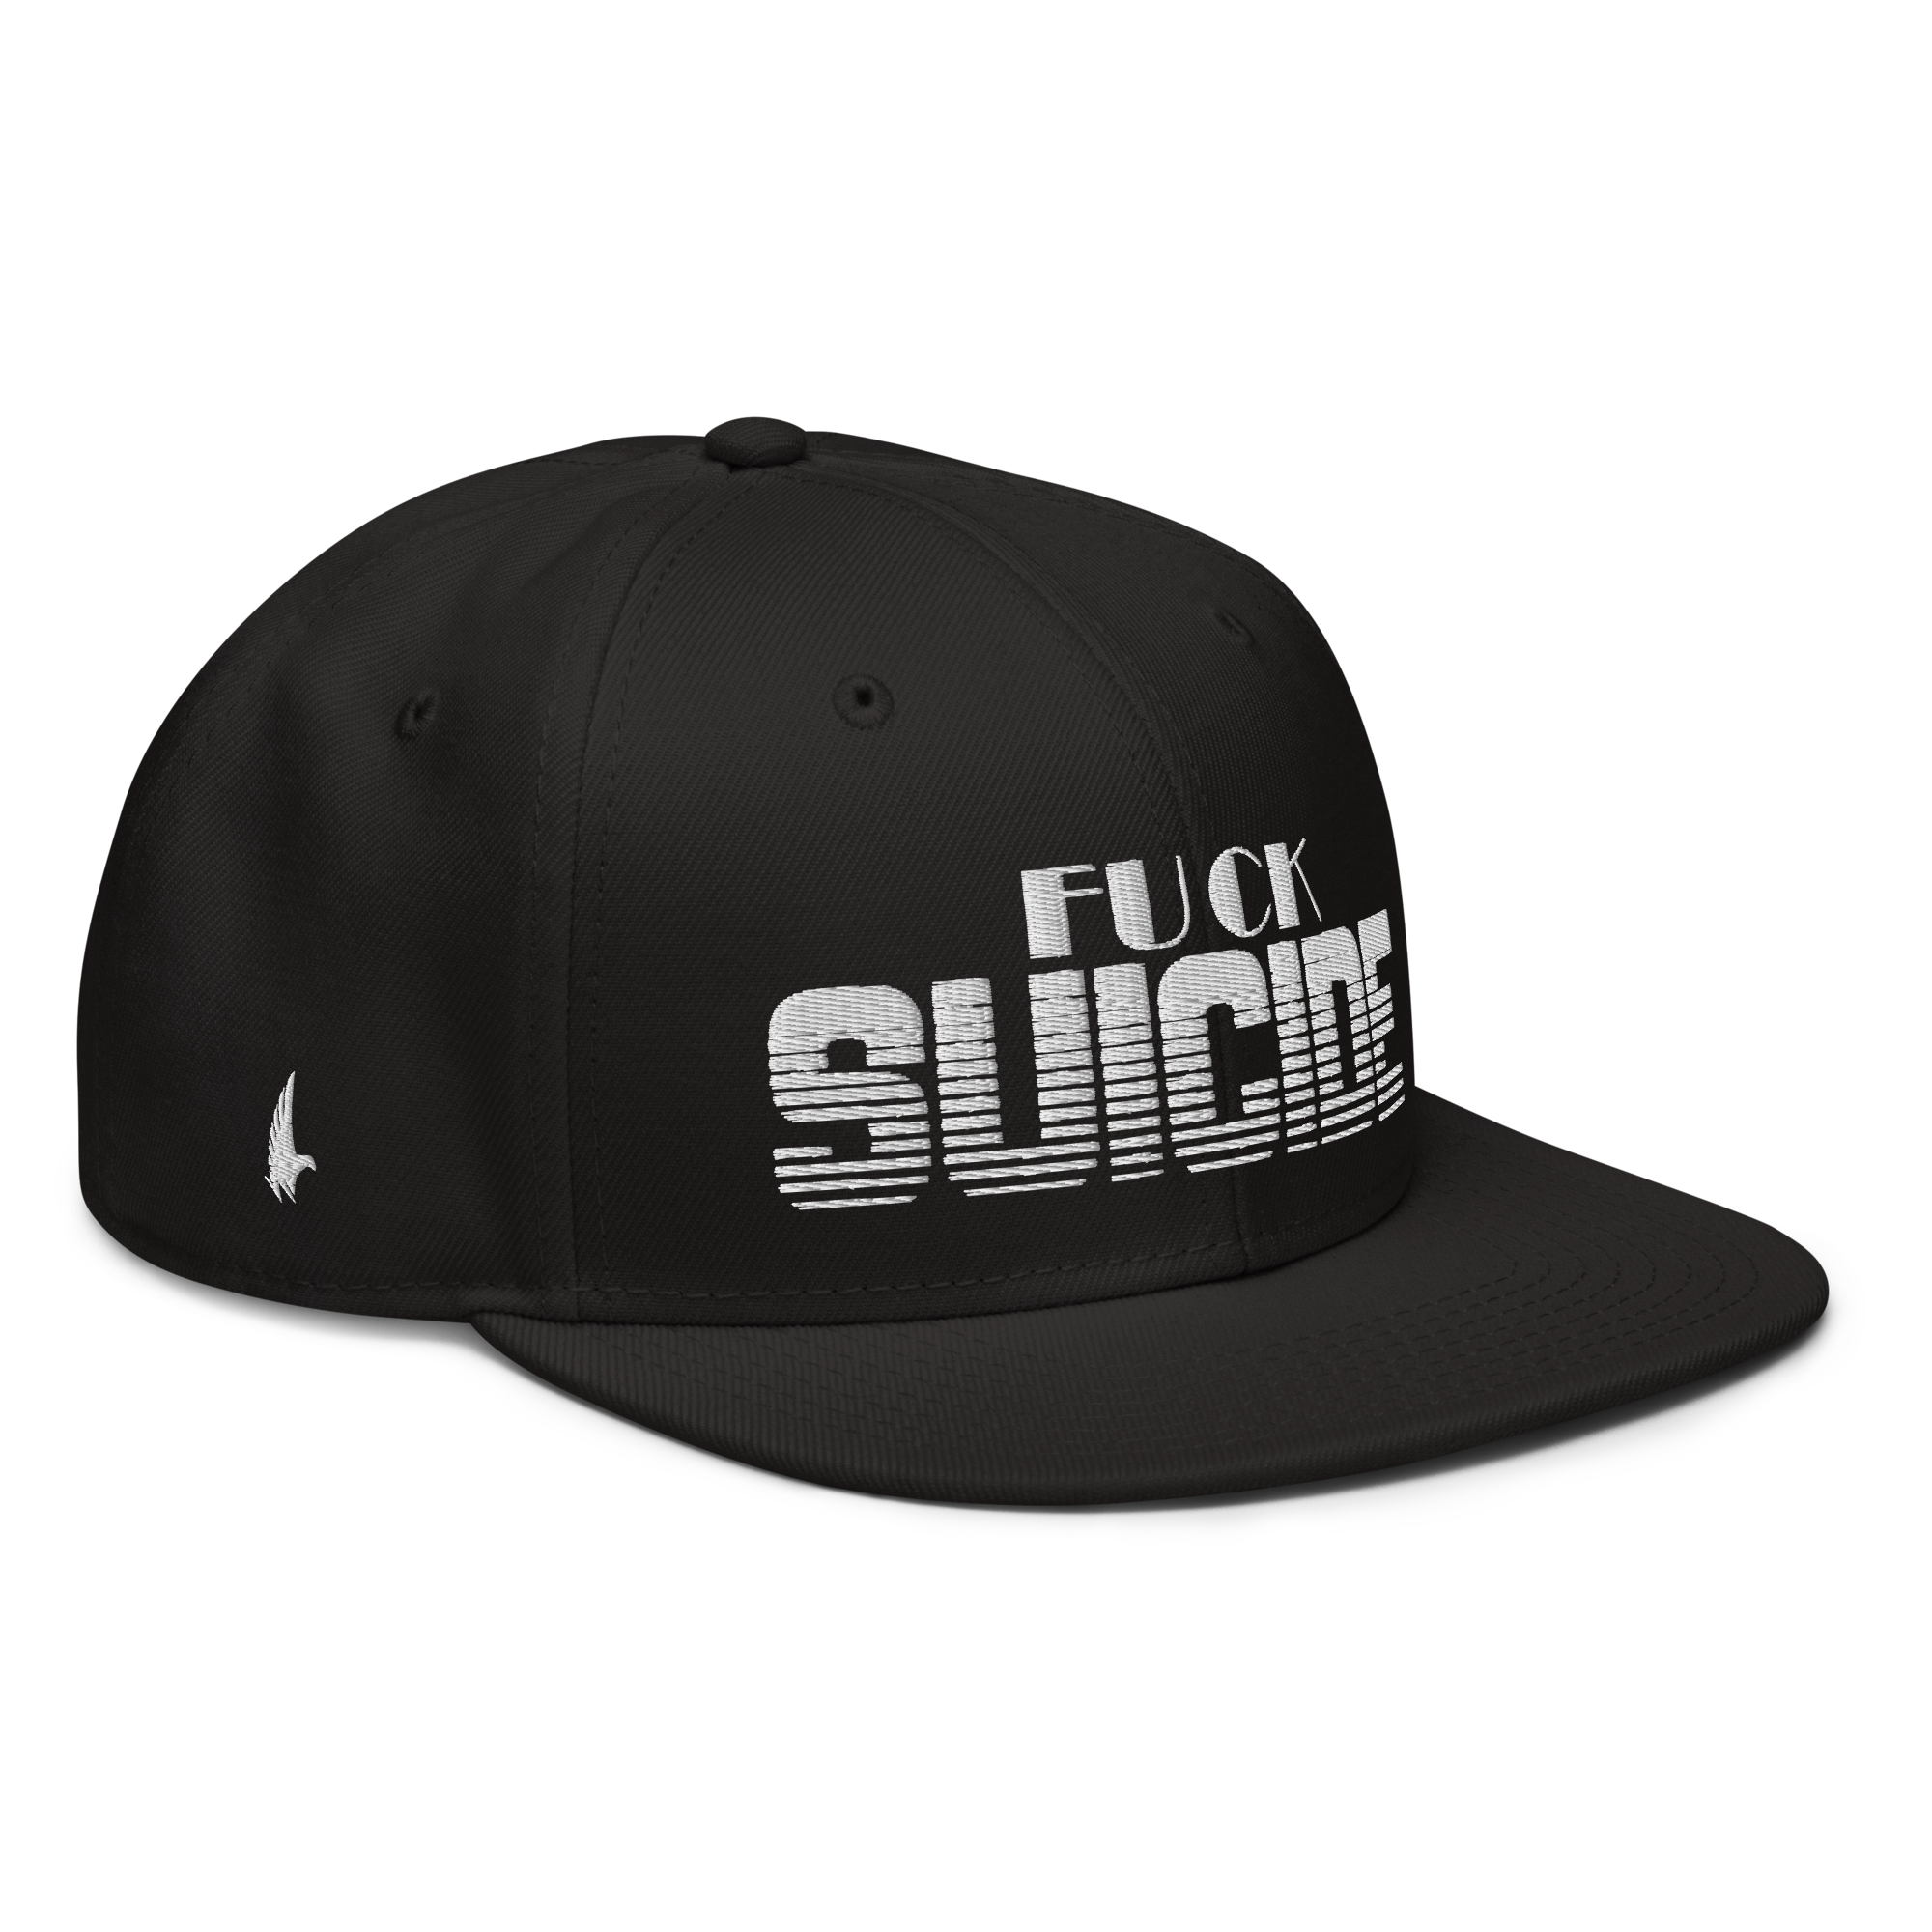 Fk Suicide Snapback Hat - Black OS - Loyalty Vibes